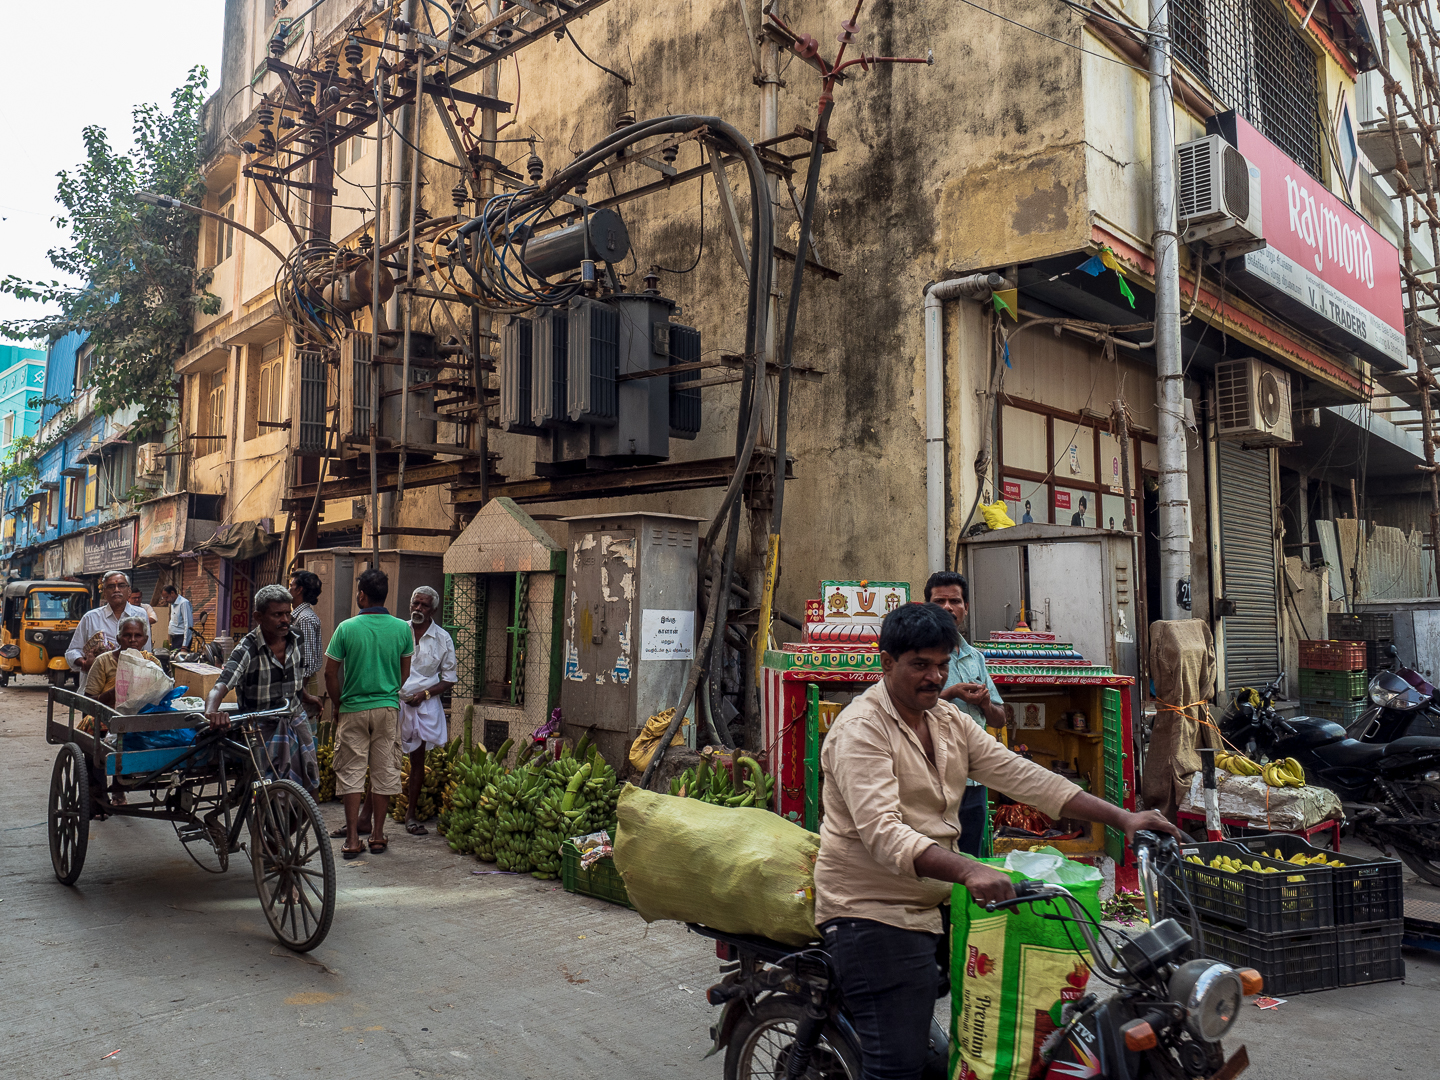  Street scene, Cochin, a city on the east coast of India 